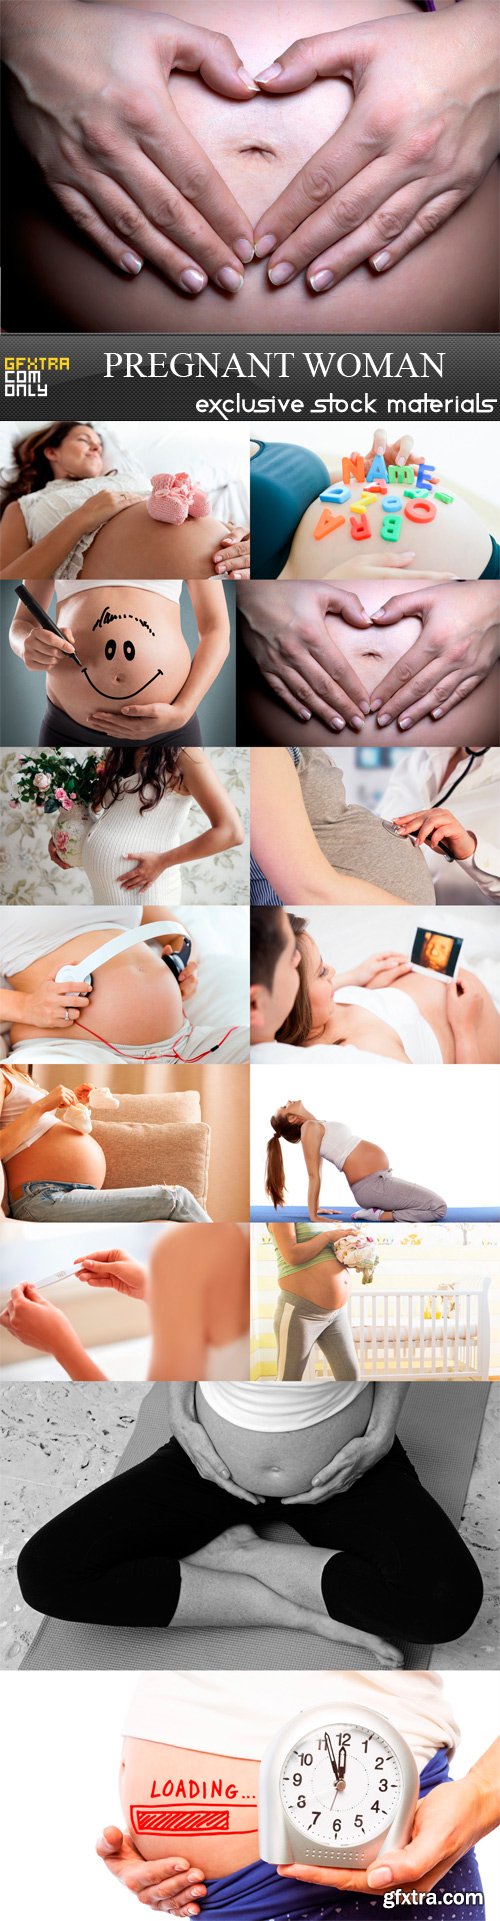 Pregnant Woman 14xJPG